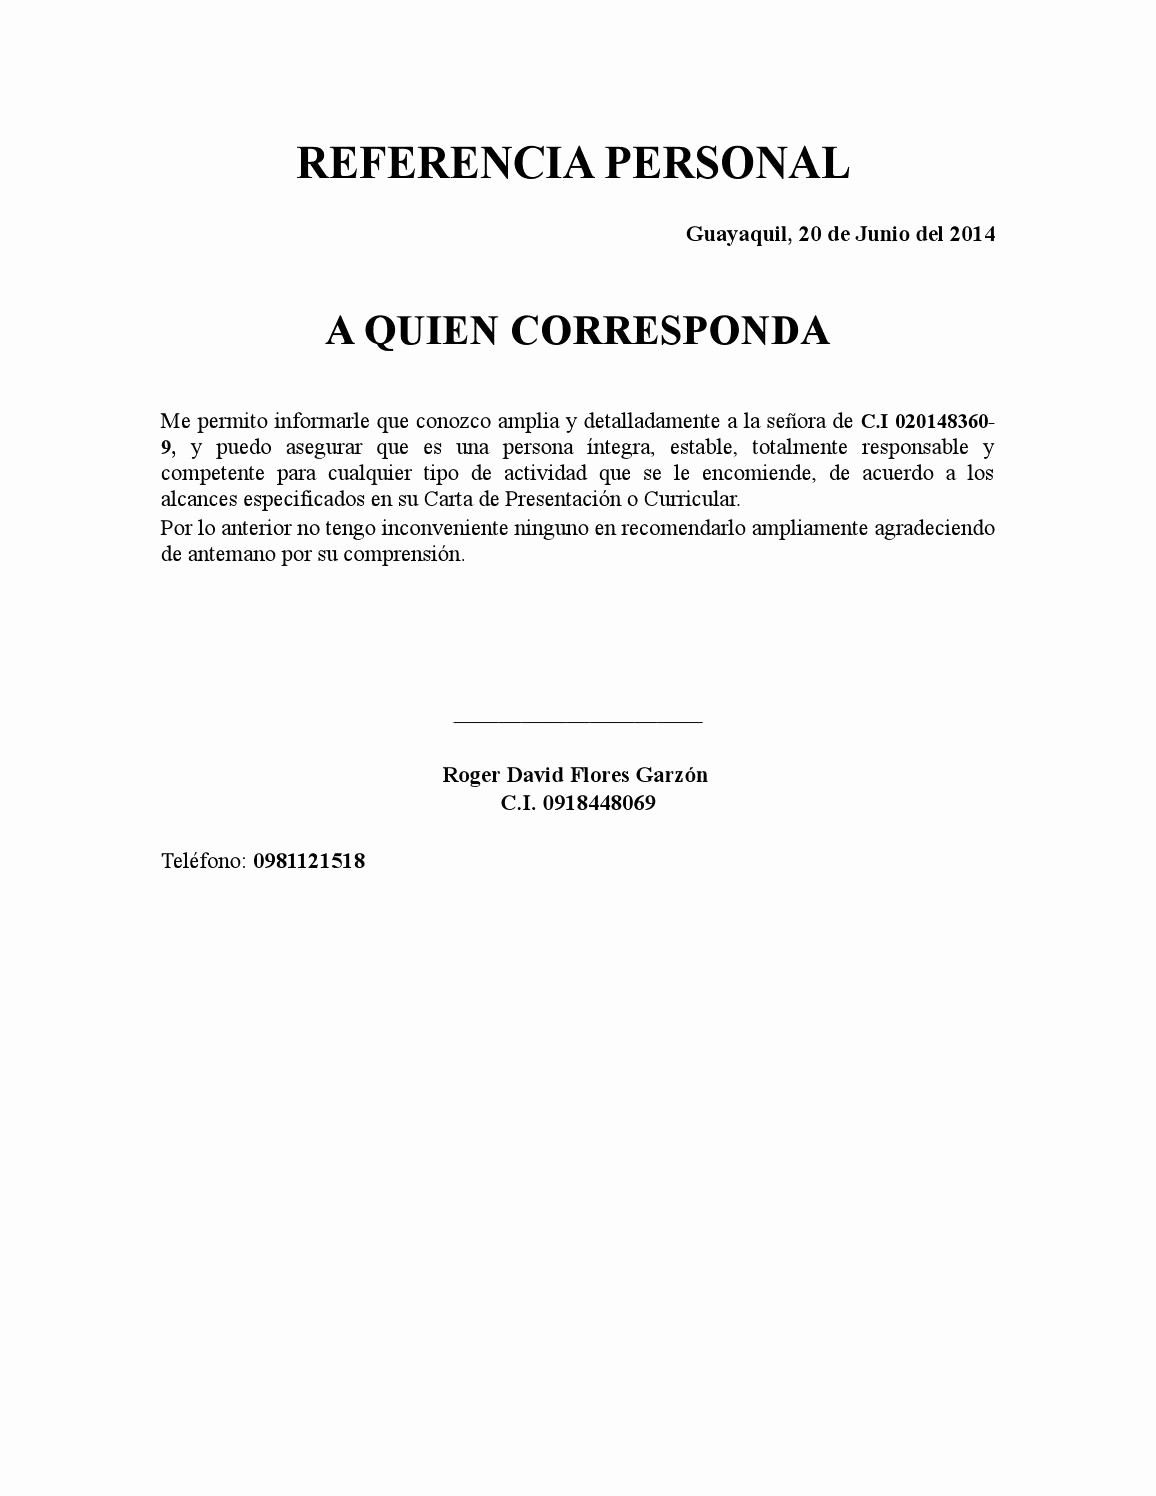 Formato Carta De Recomendacion Personal Lovely Referencia Personal Copia by Roger David Flores Garzon issuu